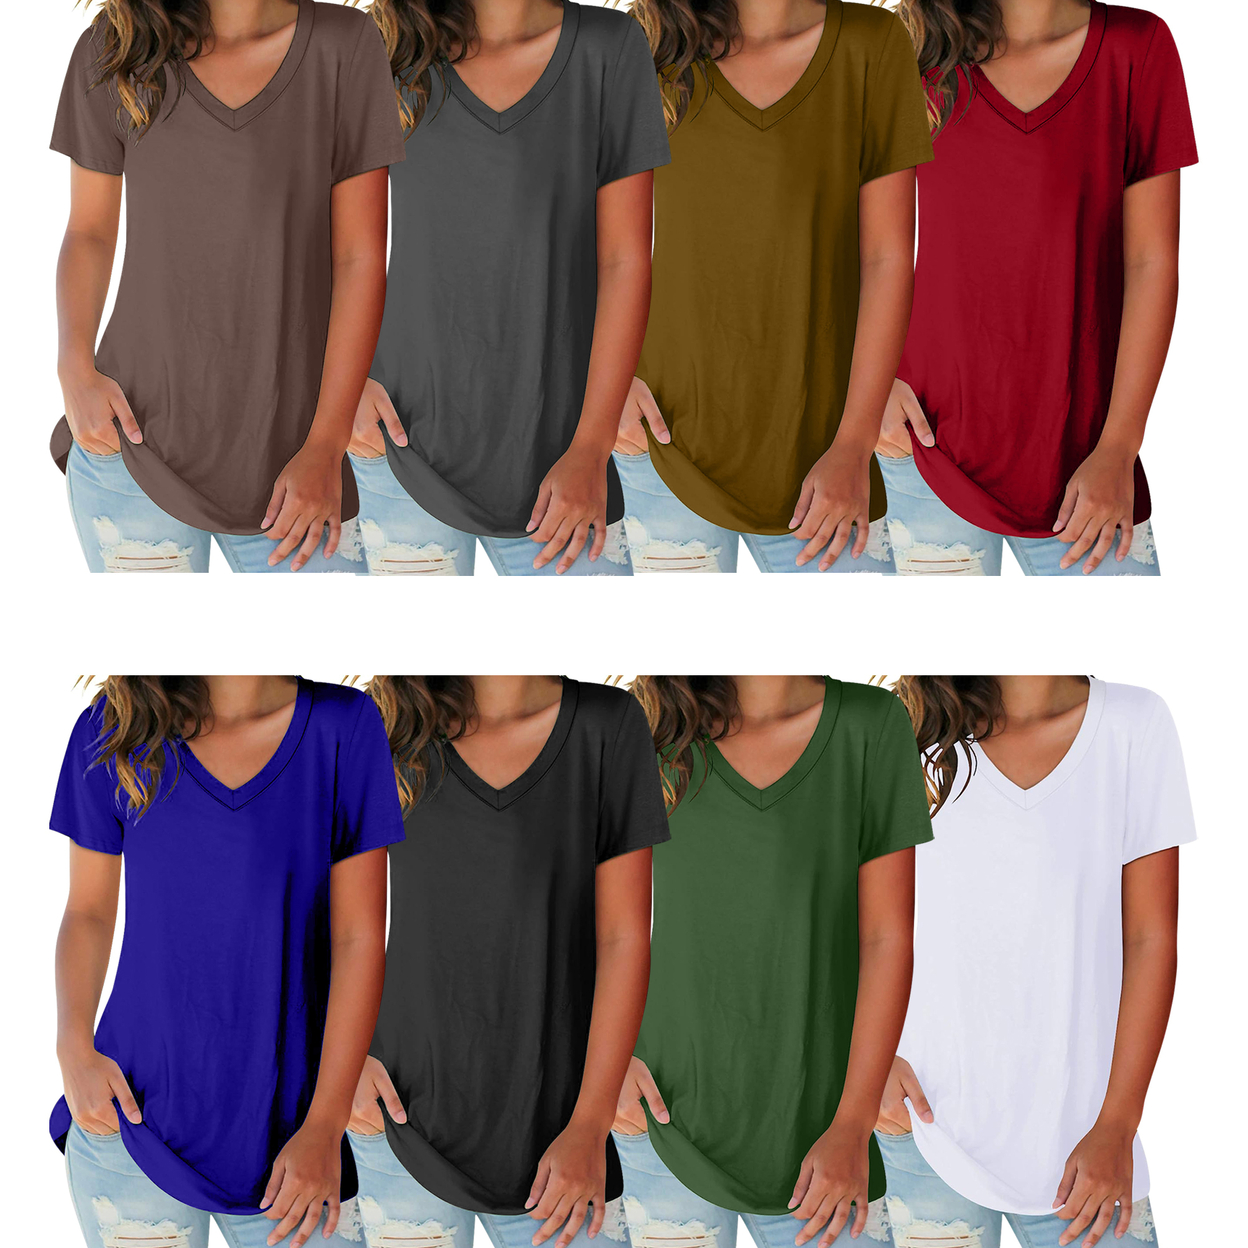 Women's Ultra-Soft Smooth Cotton Blend Basic V-Neck Short Sleeve Shirts - Brown, Large